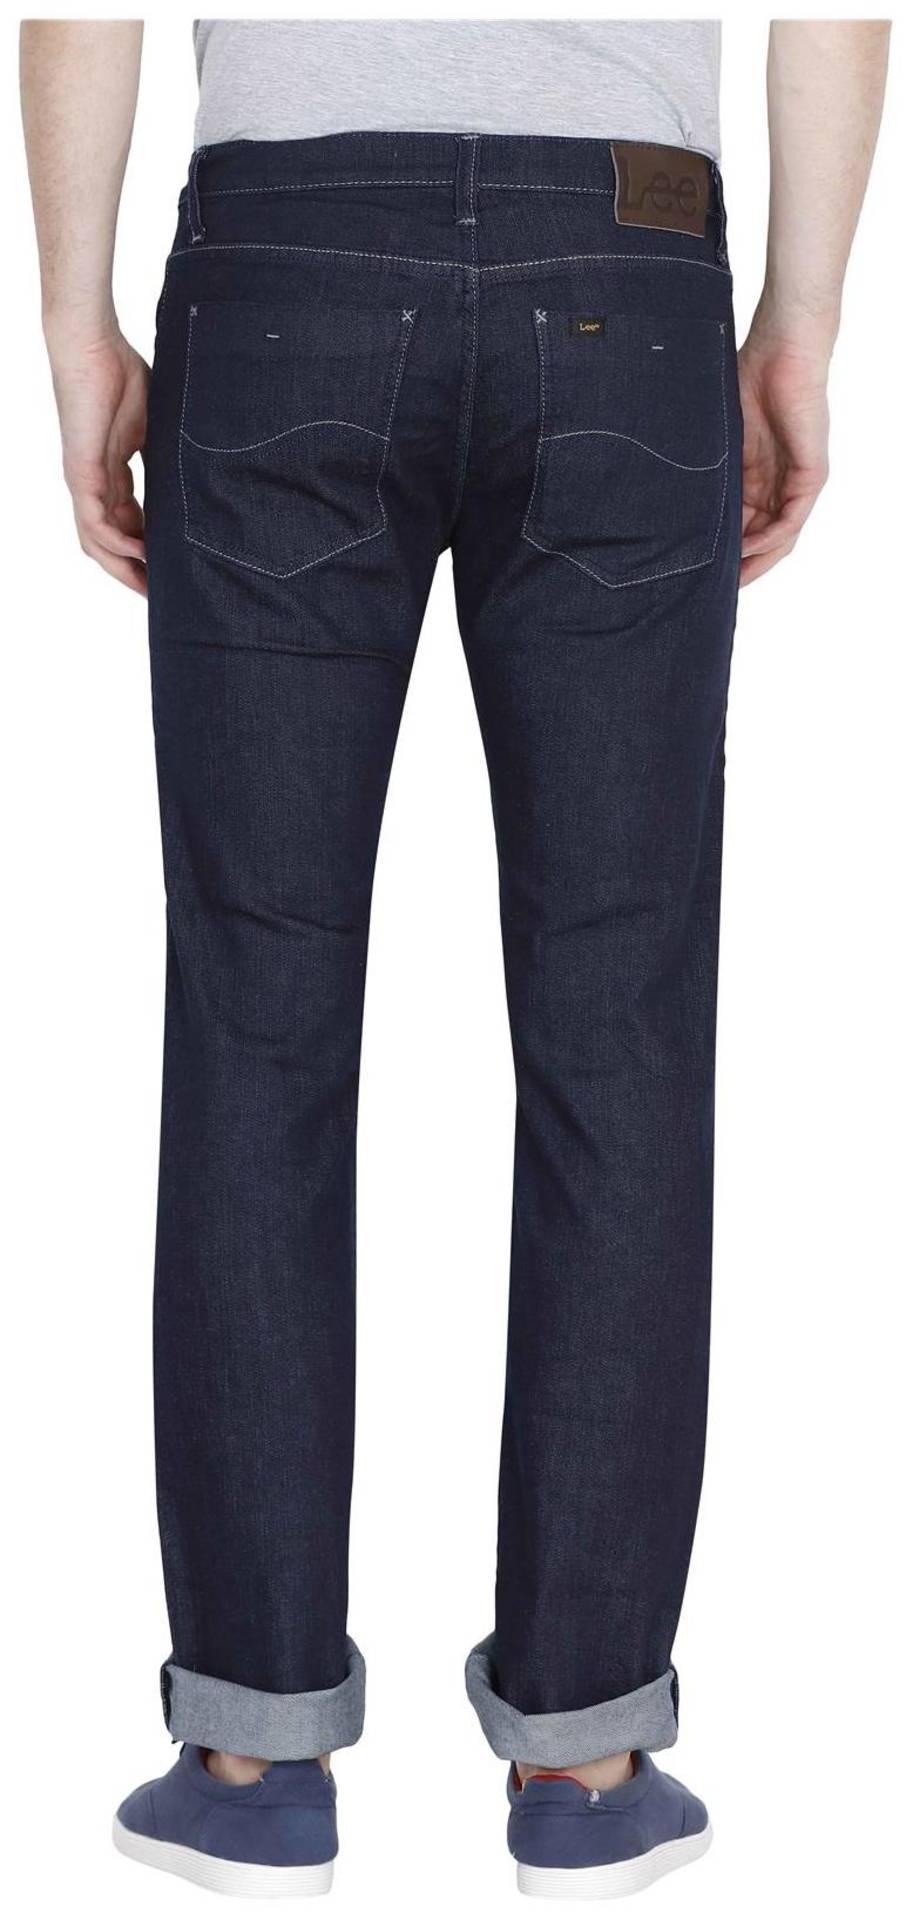 Buy Lee Men's Blue Slim Fit Jeans Online @ ₹1379 from ShopClues